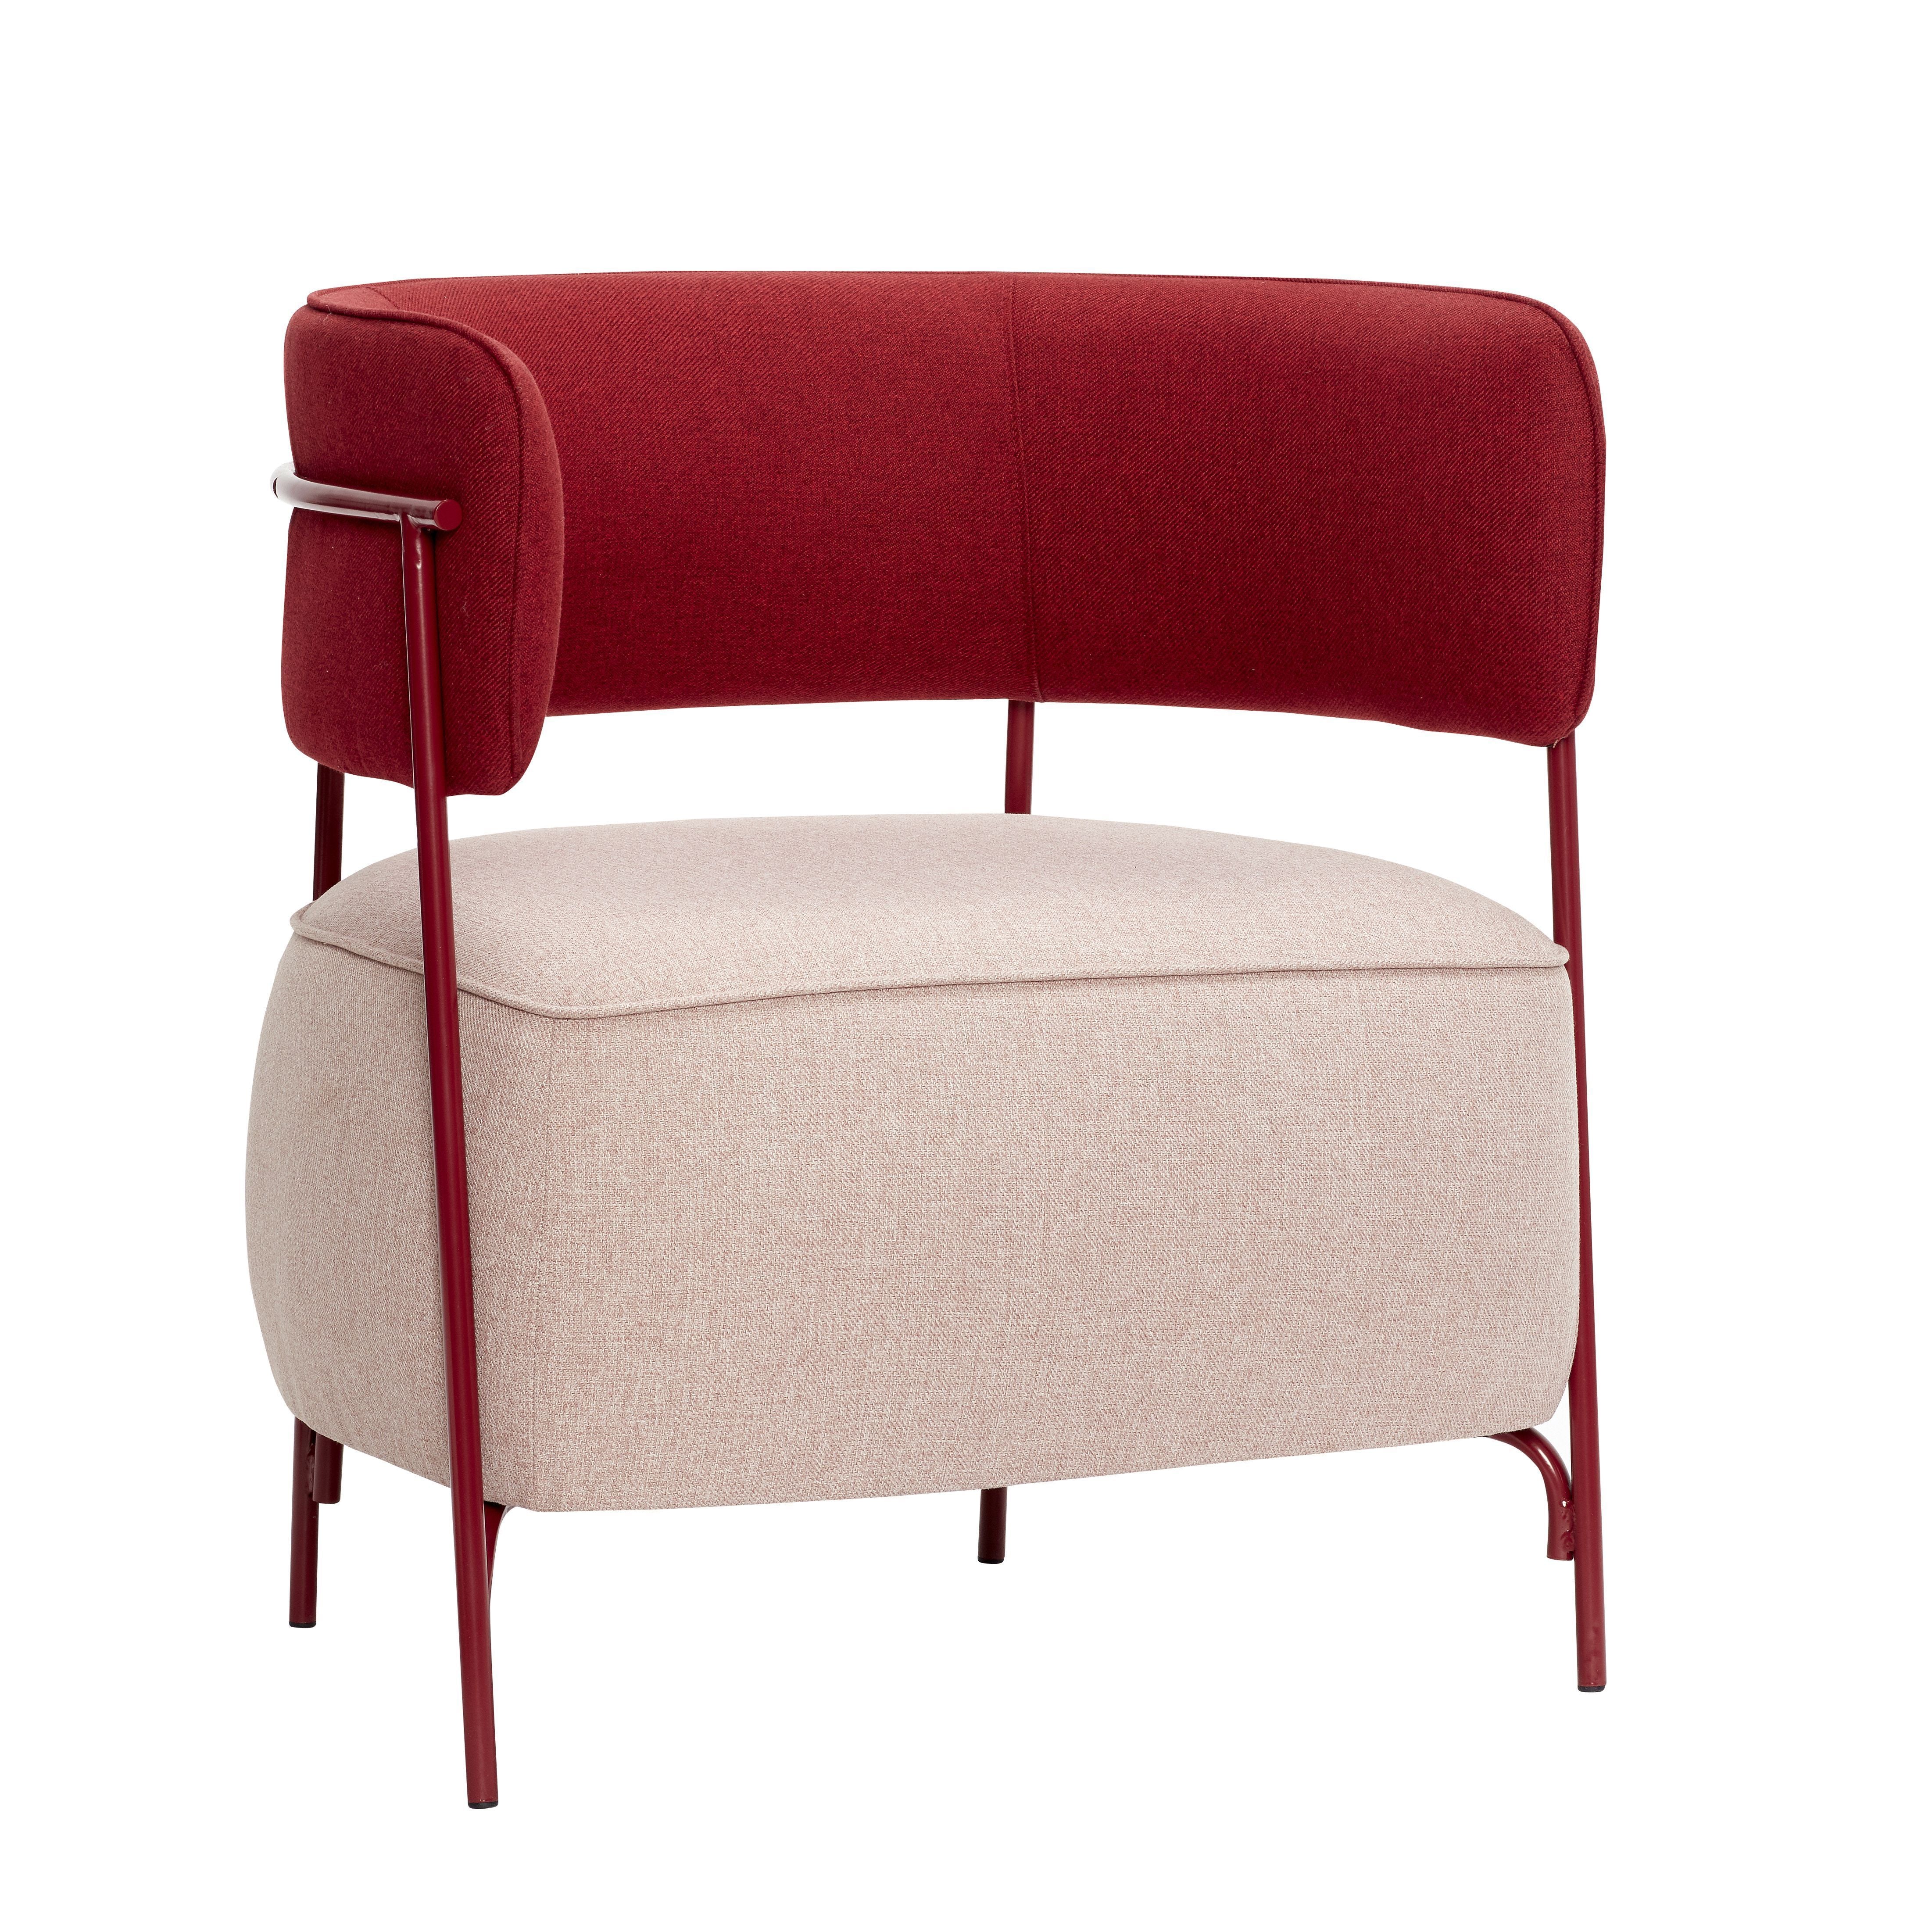 Hübsch Chaise salon cerise polyester / métal rose / rouge